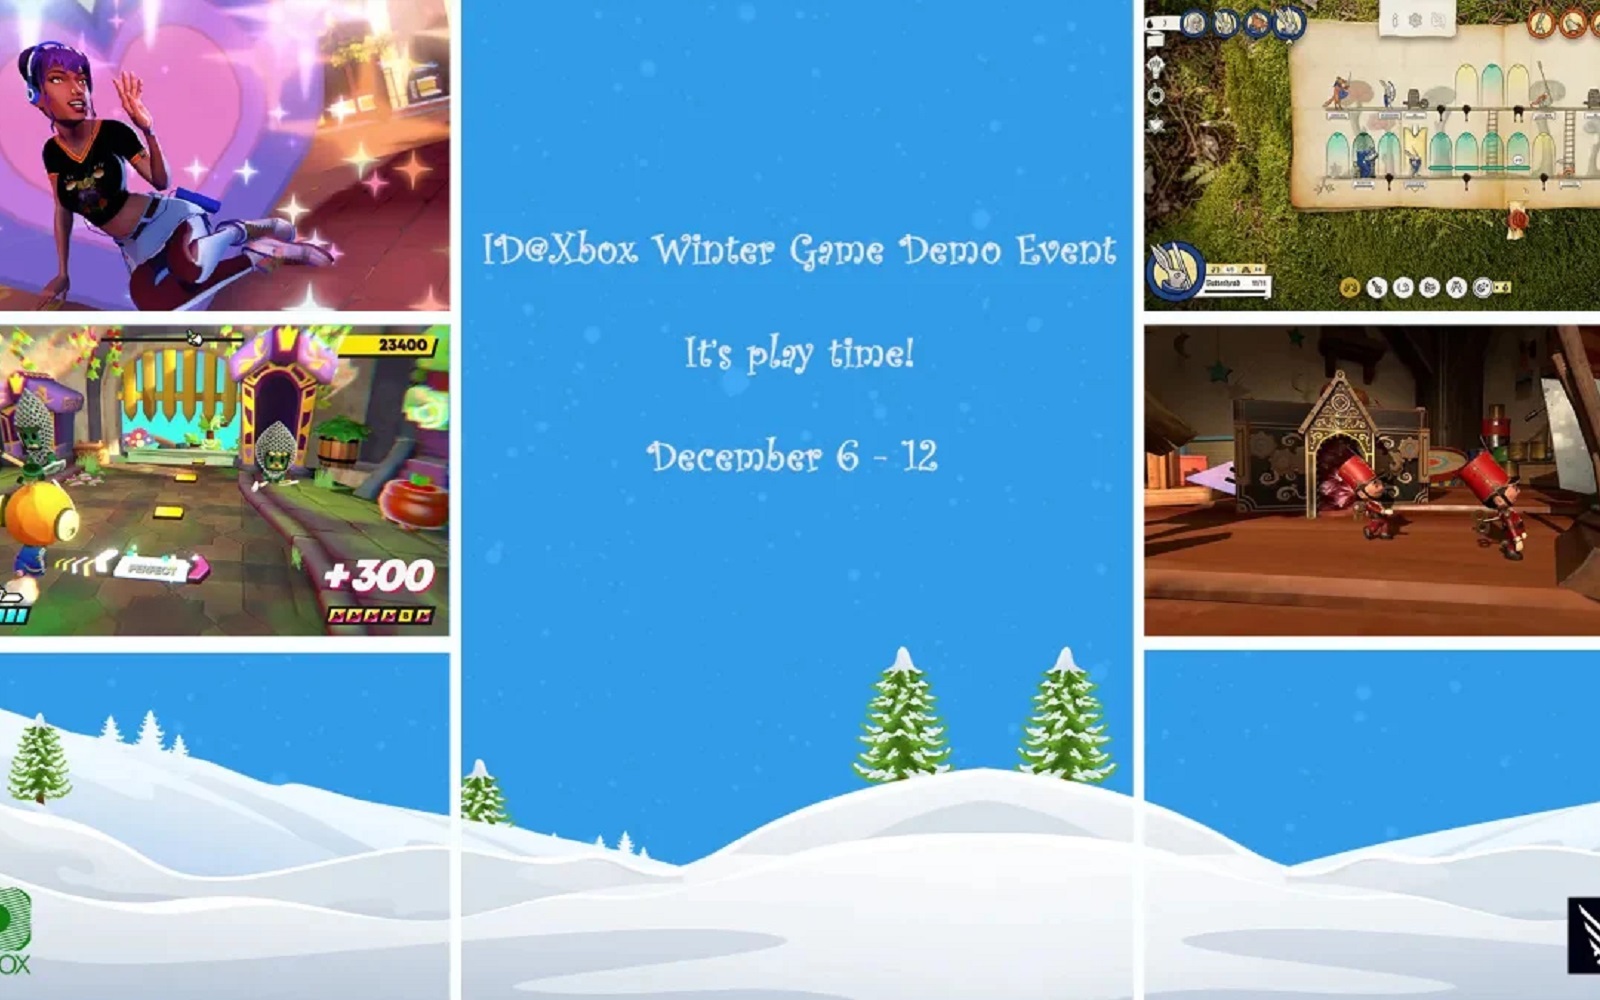 ID@Xbox Winter Game Demo Event